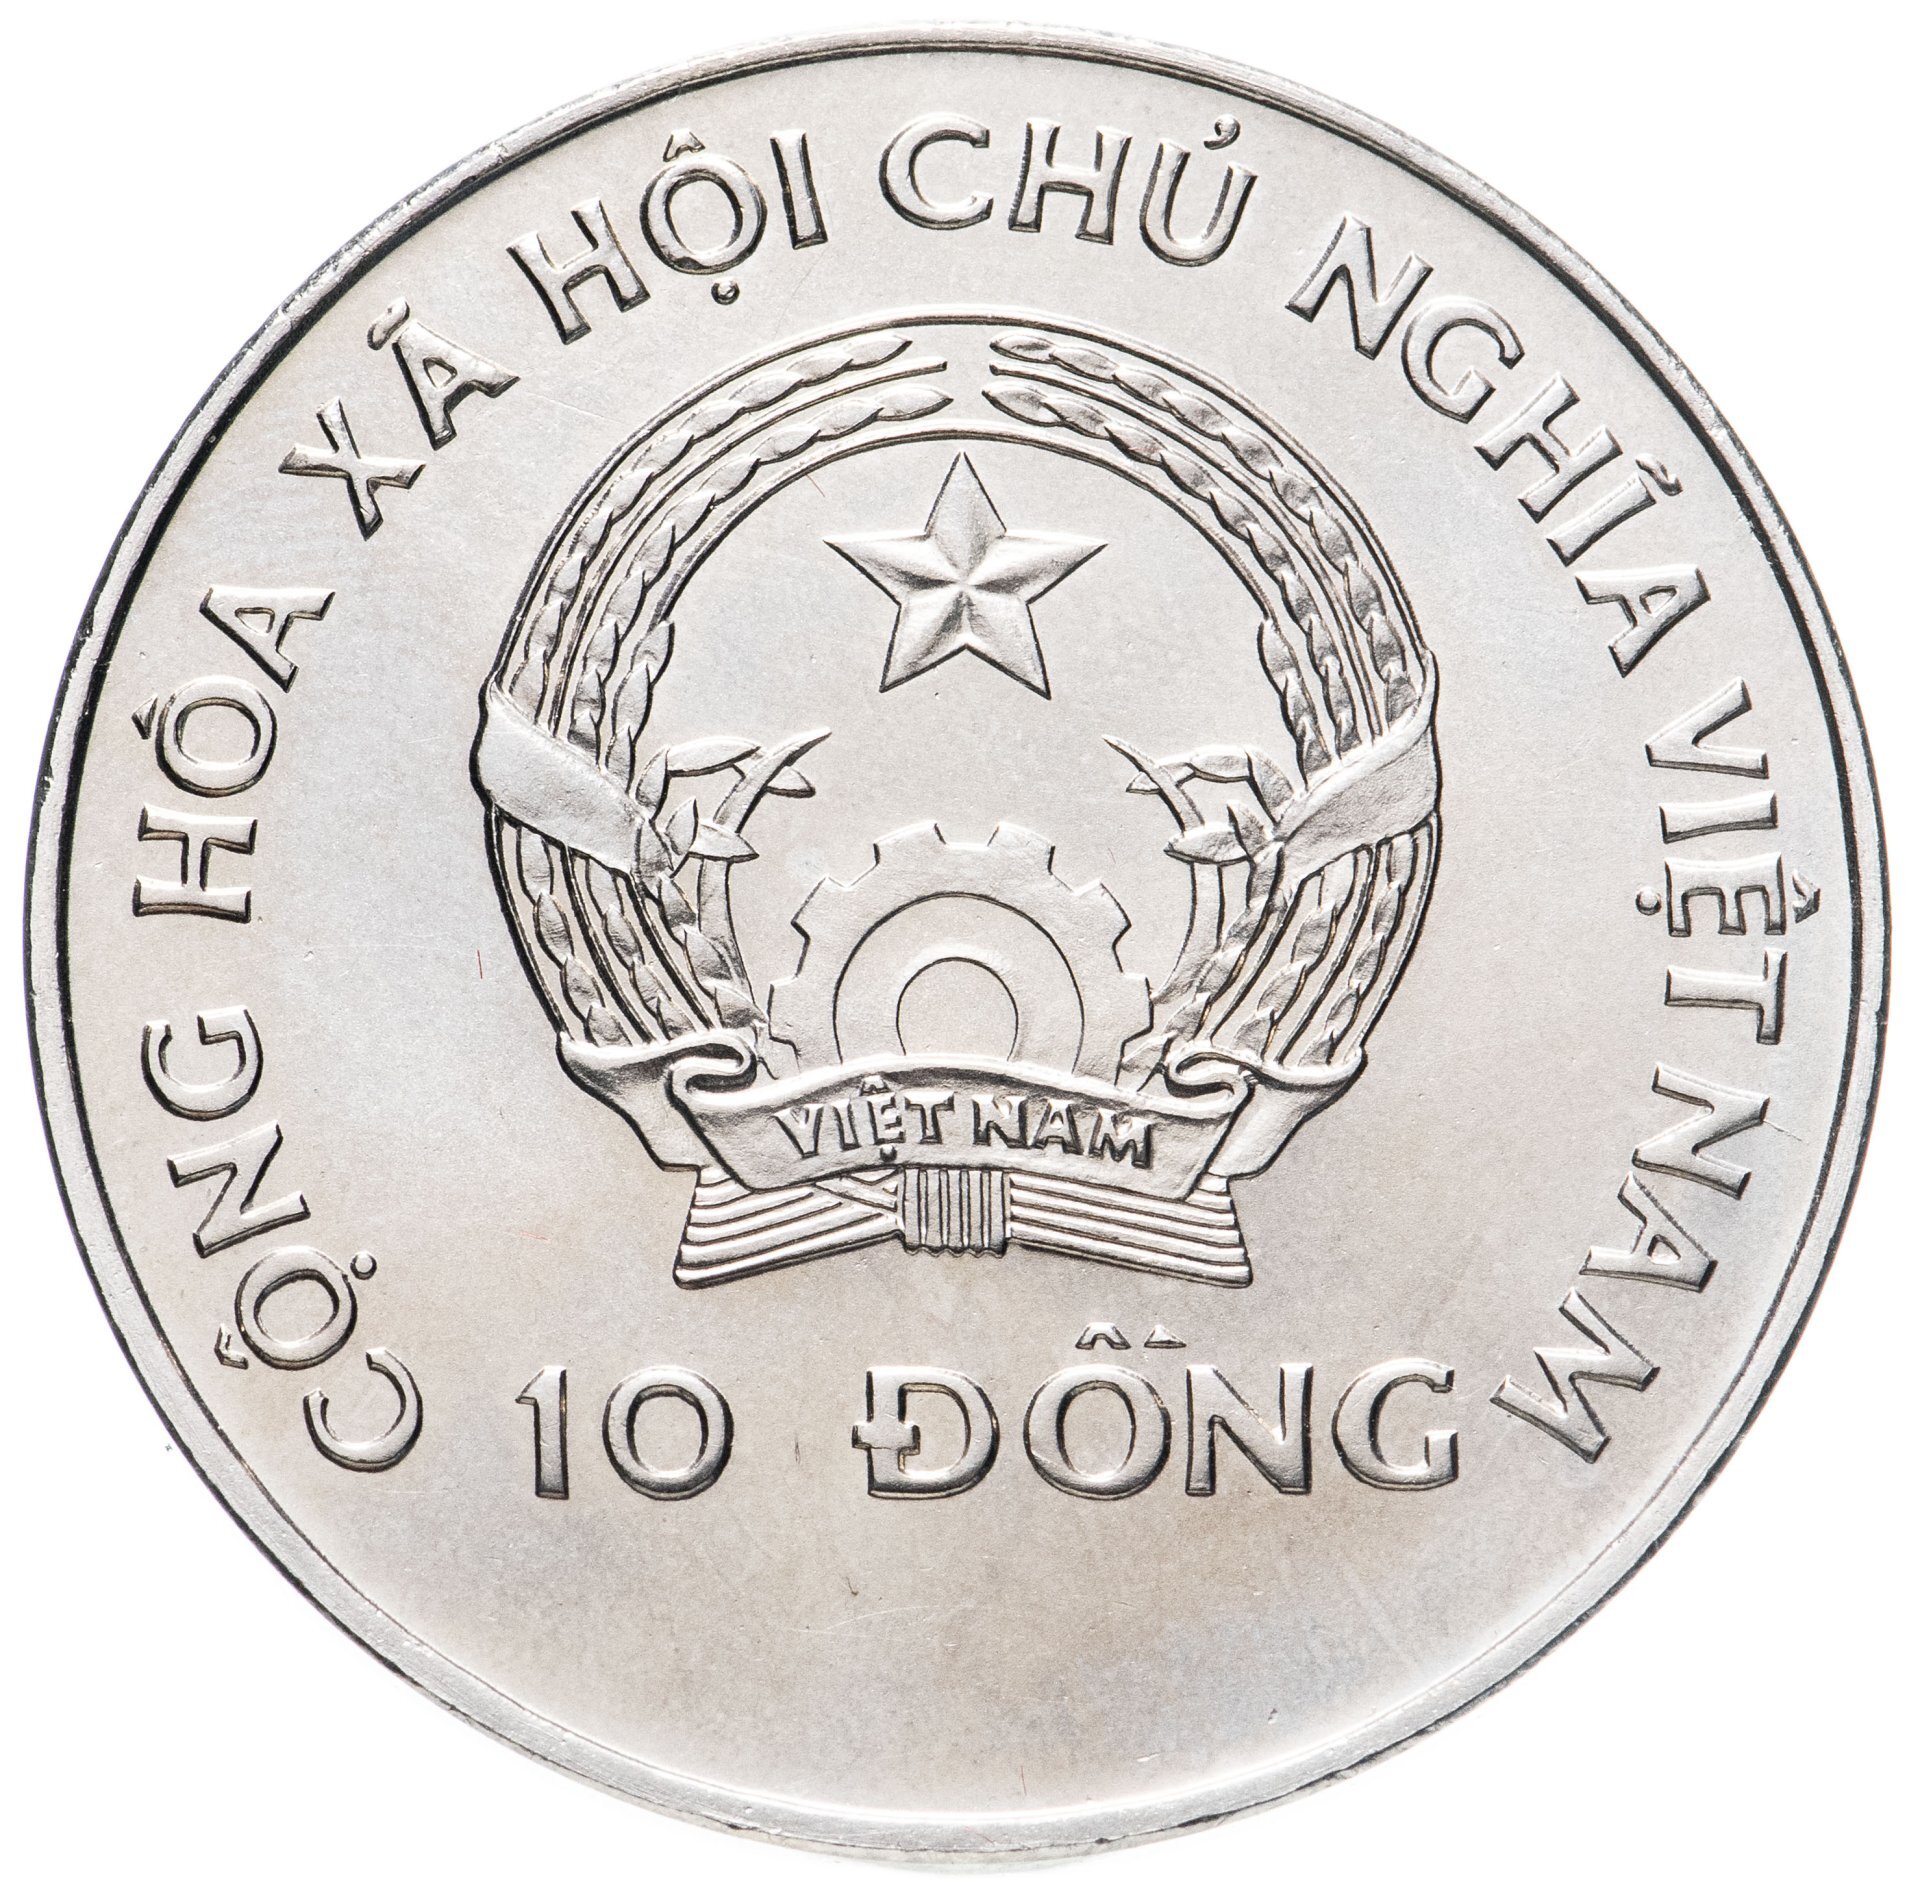 Вьетнам монеты 100 2013г с императором